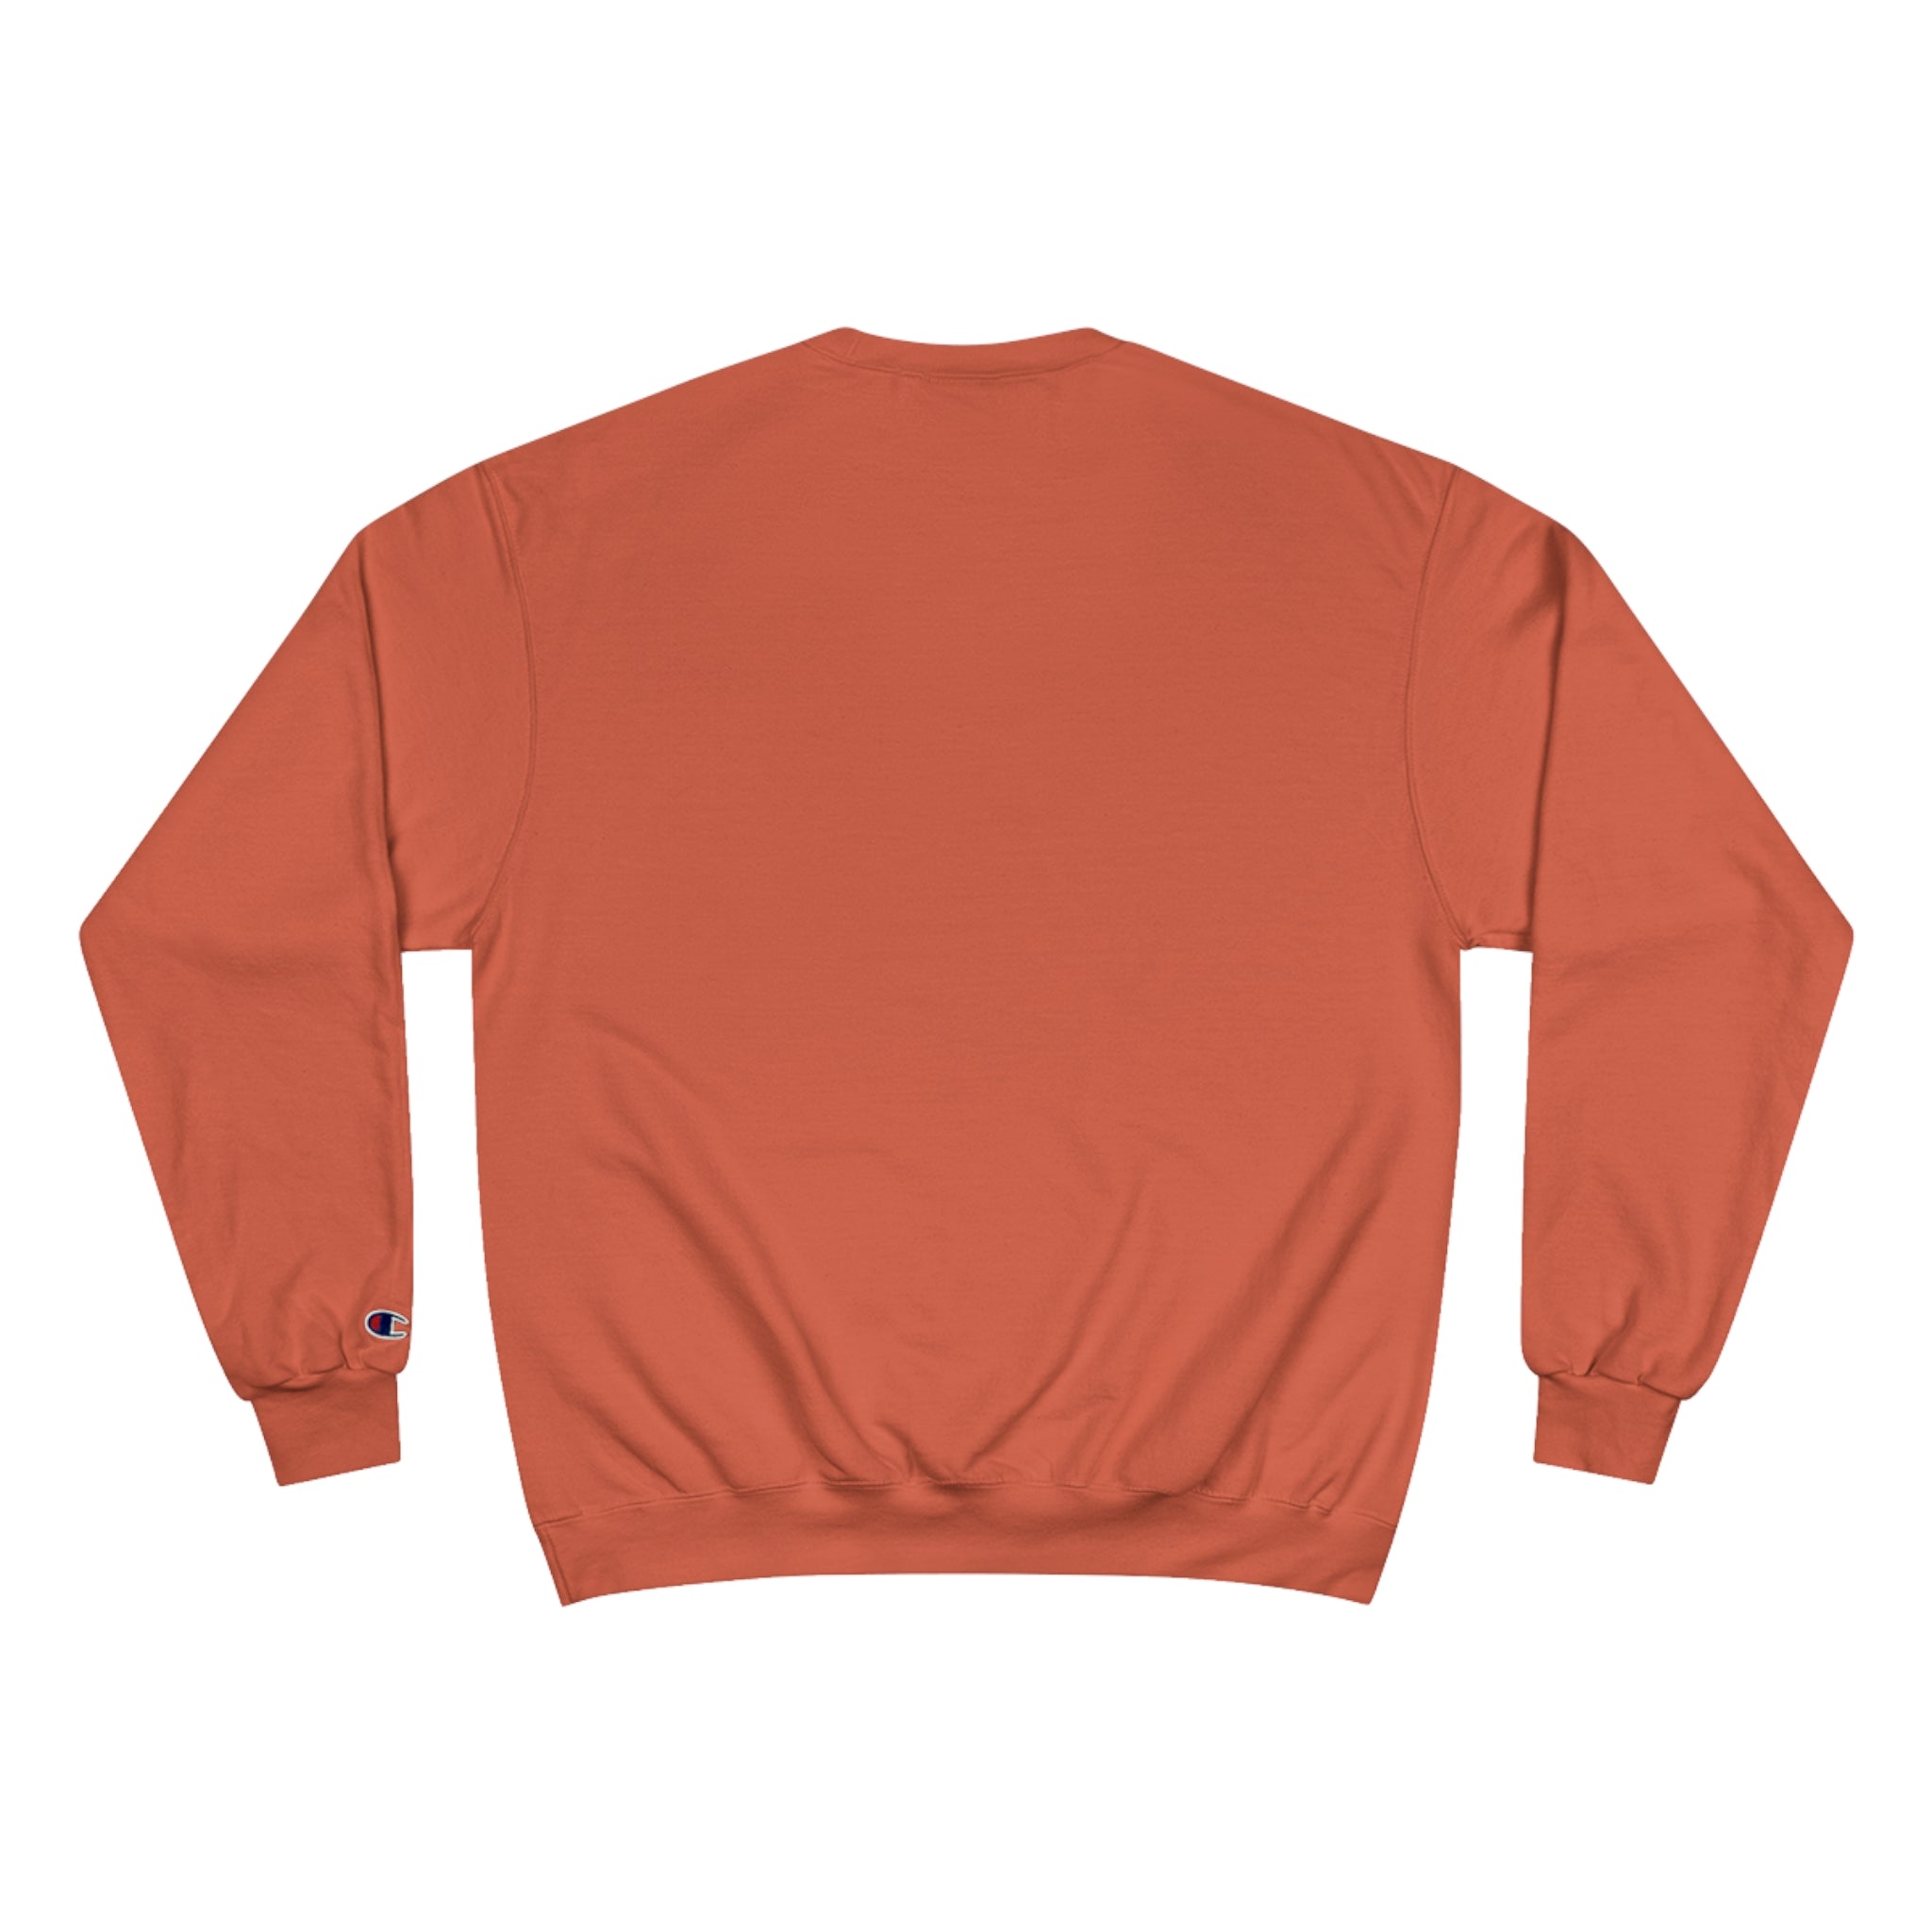 Champion Sweatshirt - Abstract Designs 05